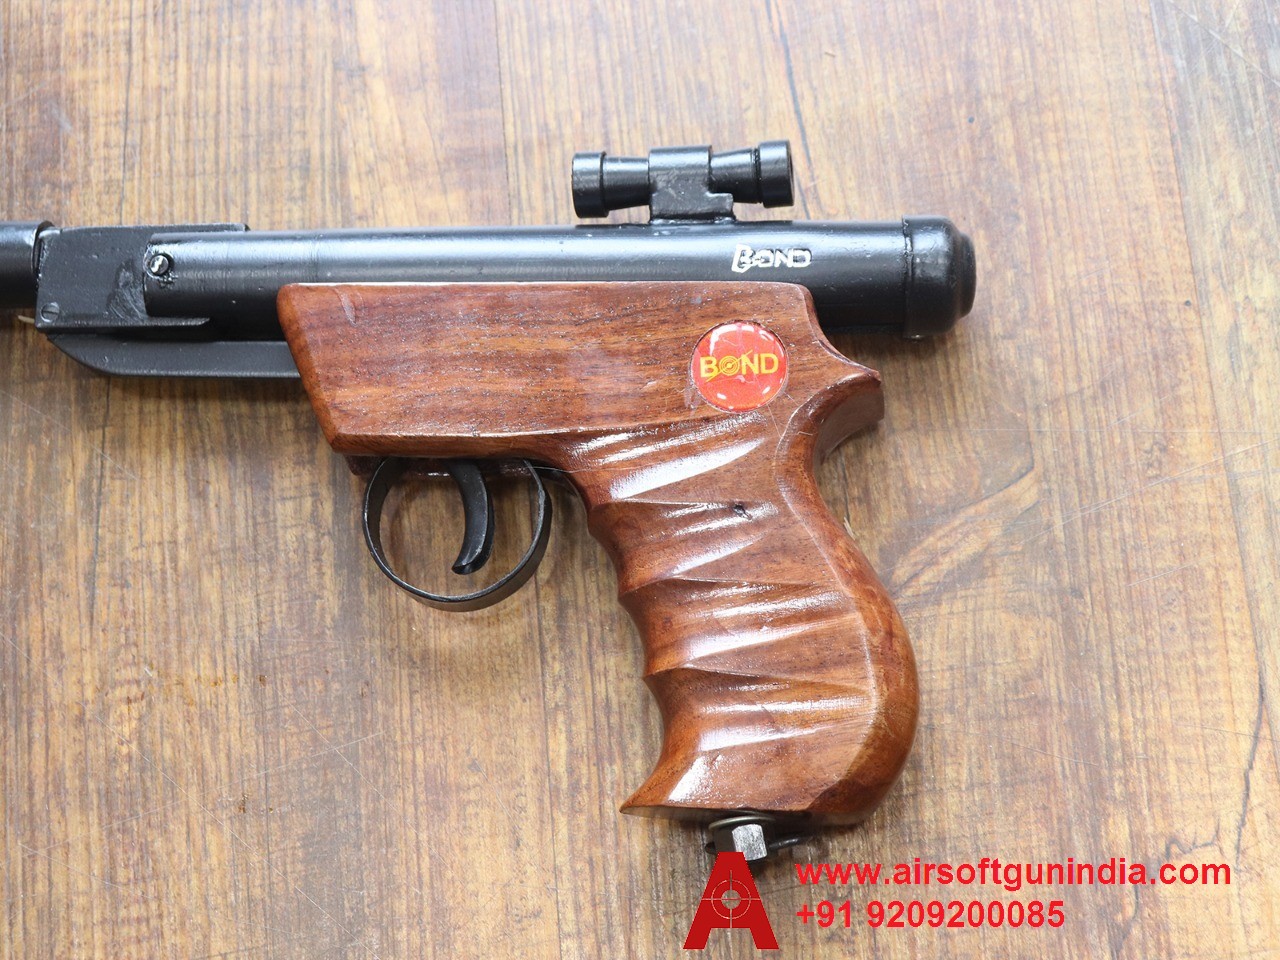 Bond Target Plus Wooden Single-Shot .177 Caliber / 4.5 Mm Indian Air Pistol By Airsoft Gun India